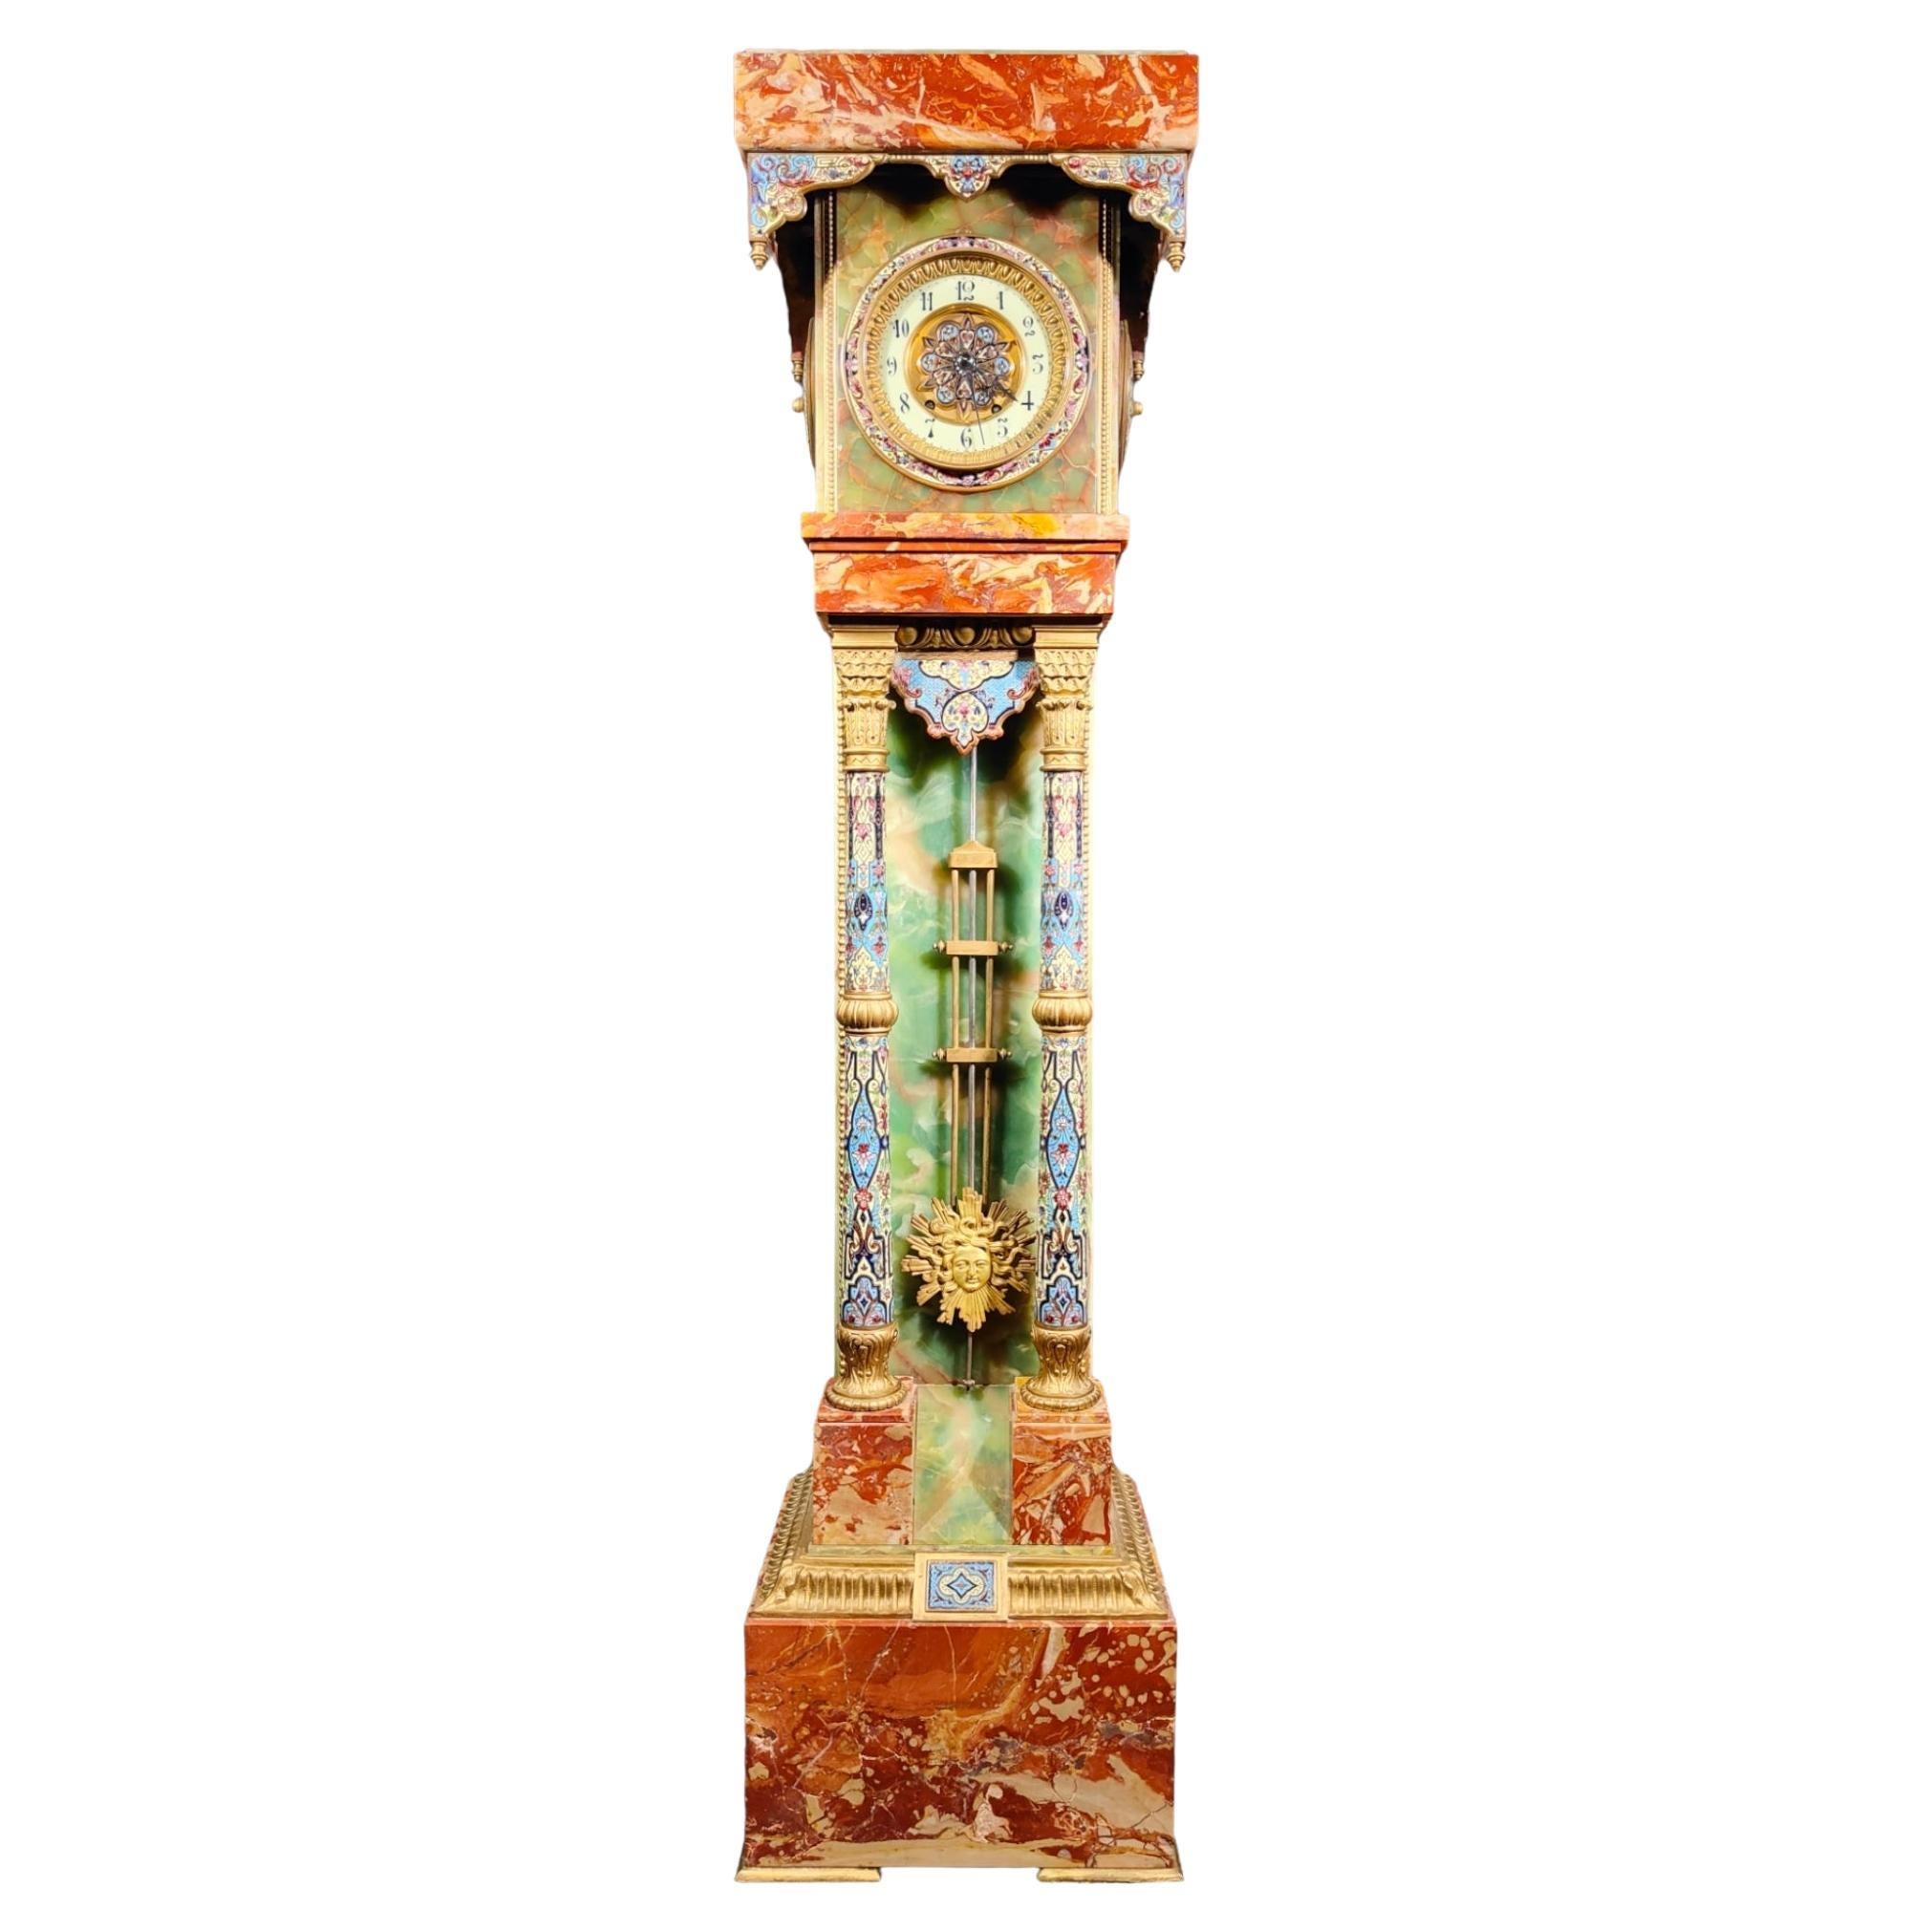 French Clock on Pedestal in Ormolu and Onyx Champlevé Enamel